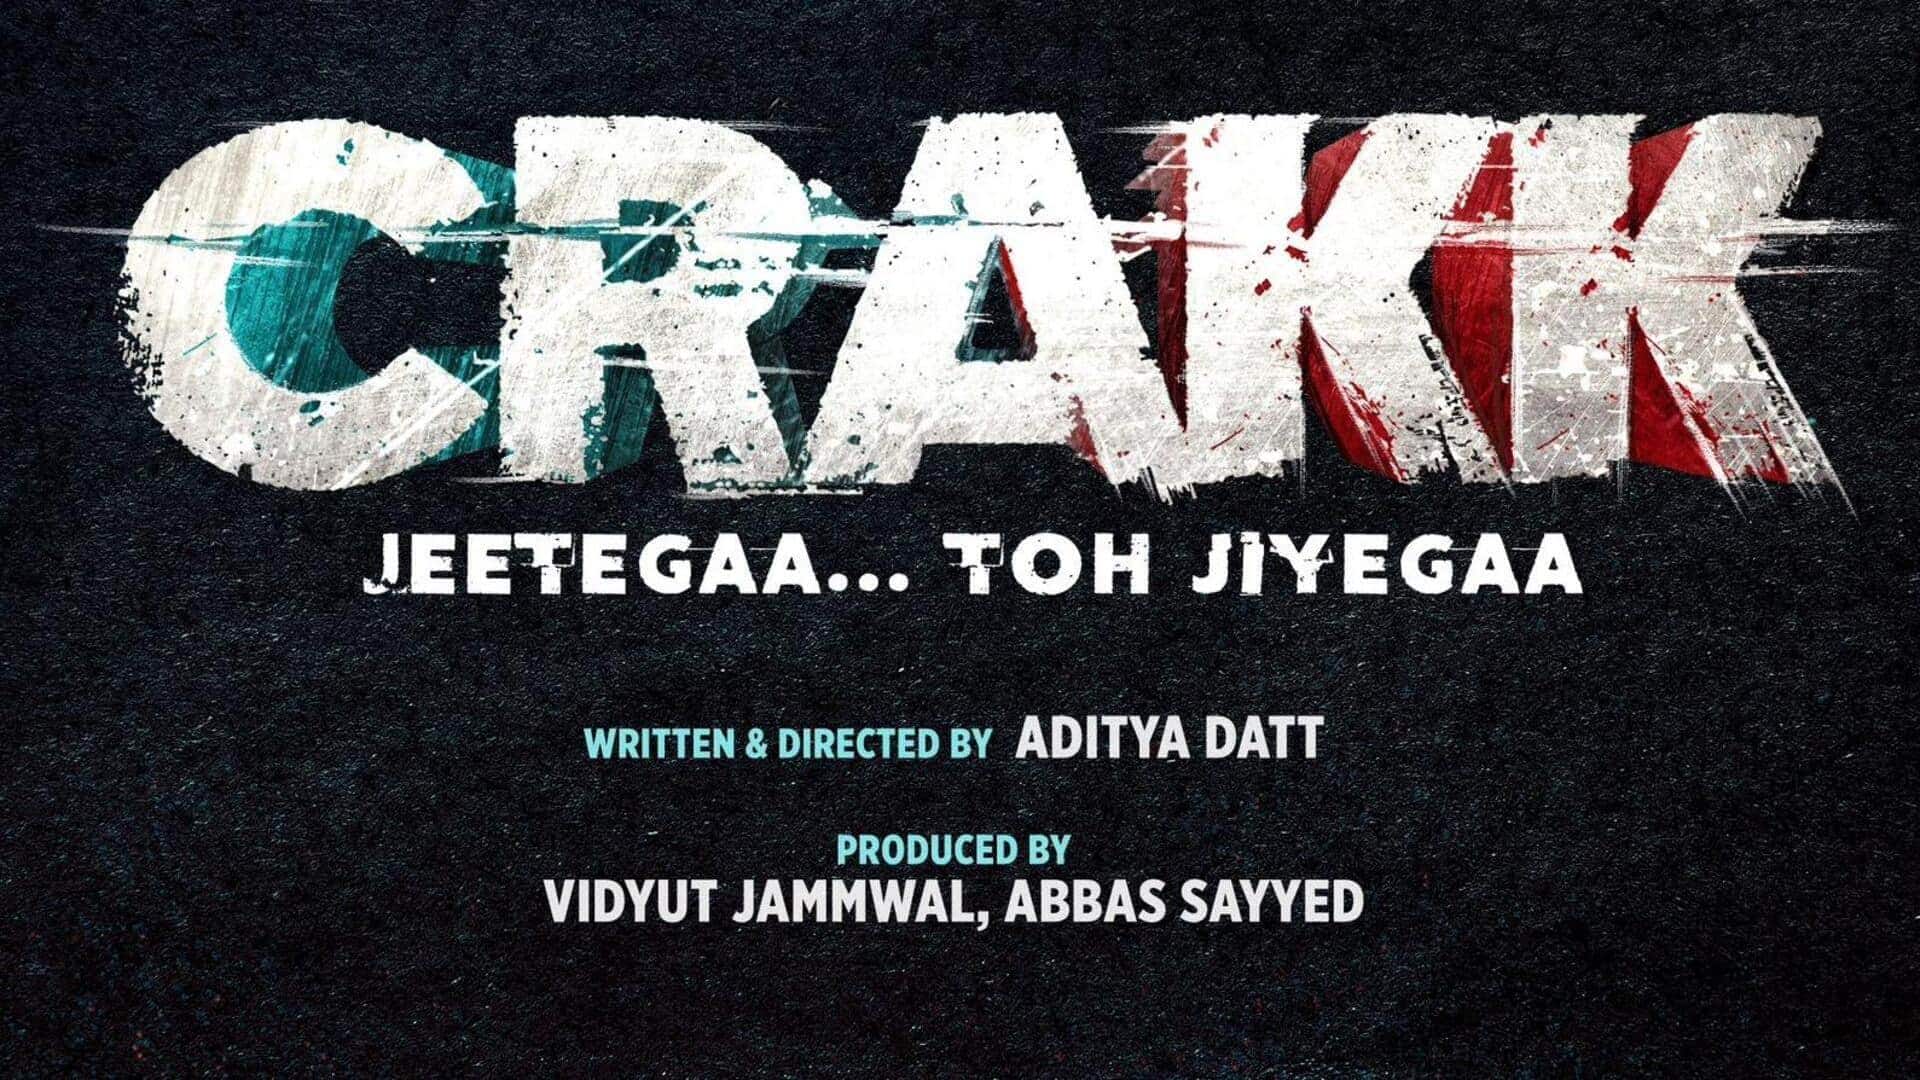 'Crakk' teaser: Vidyut Jammwal cracks the gold standard of machismo